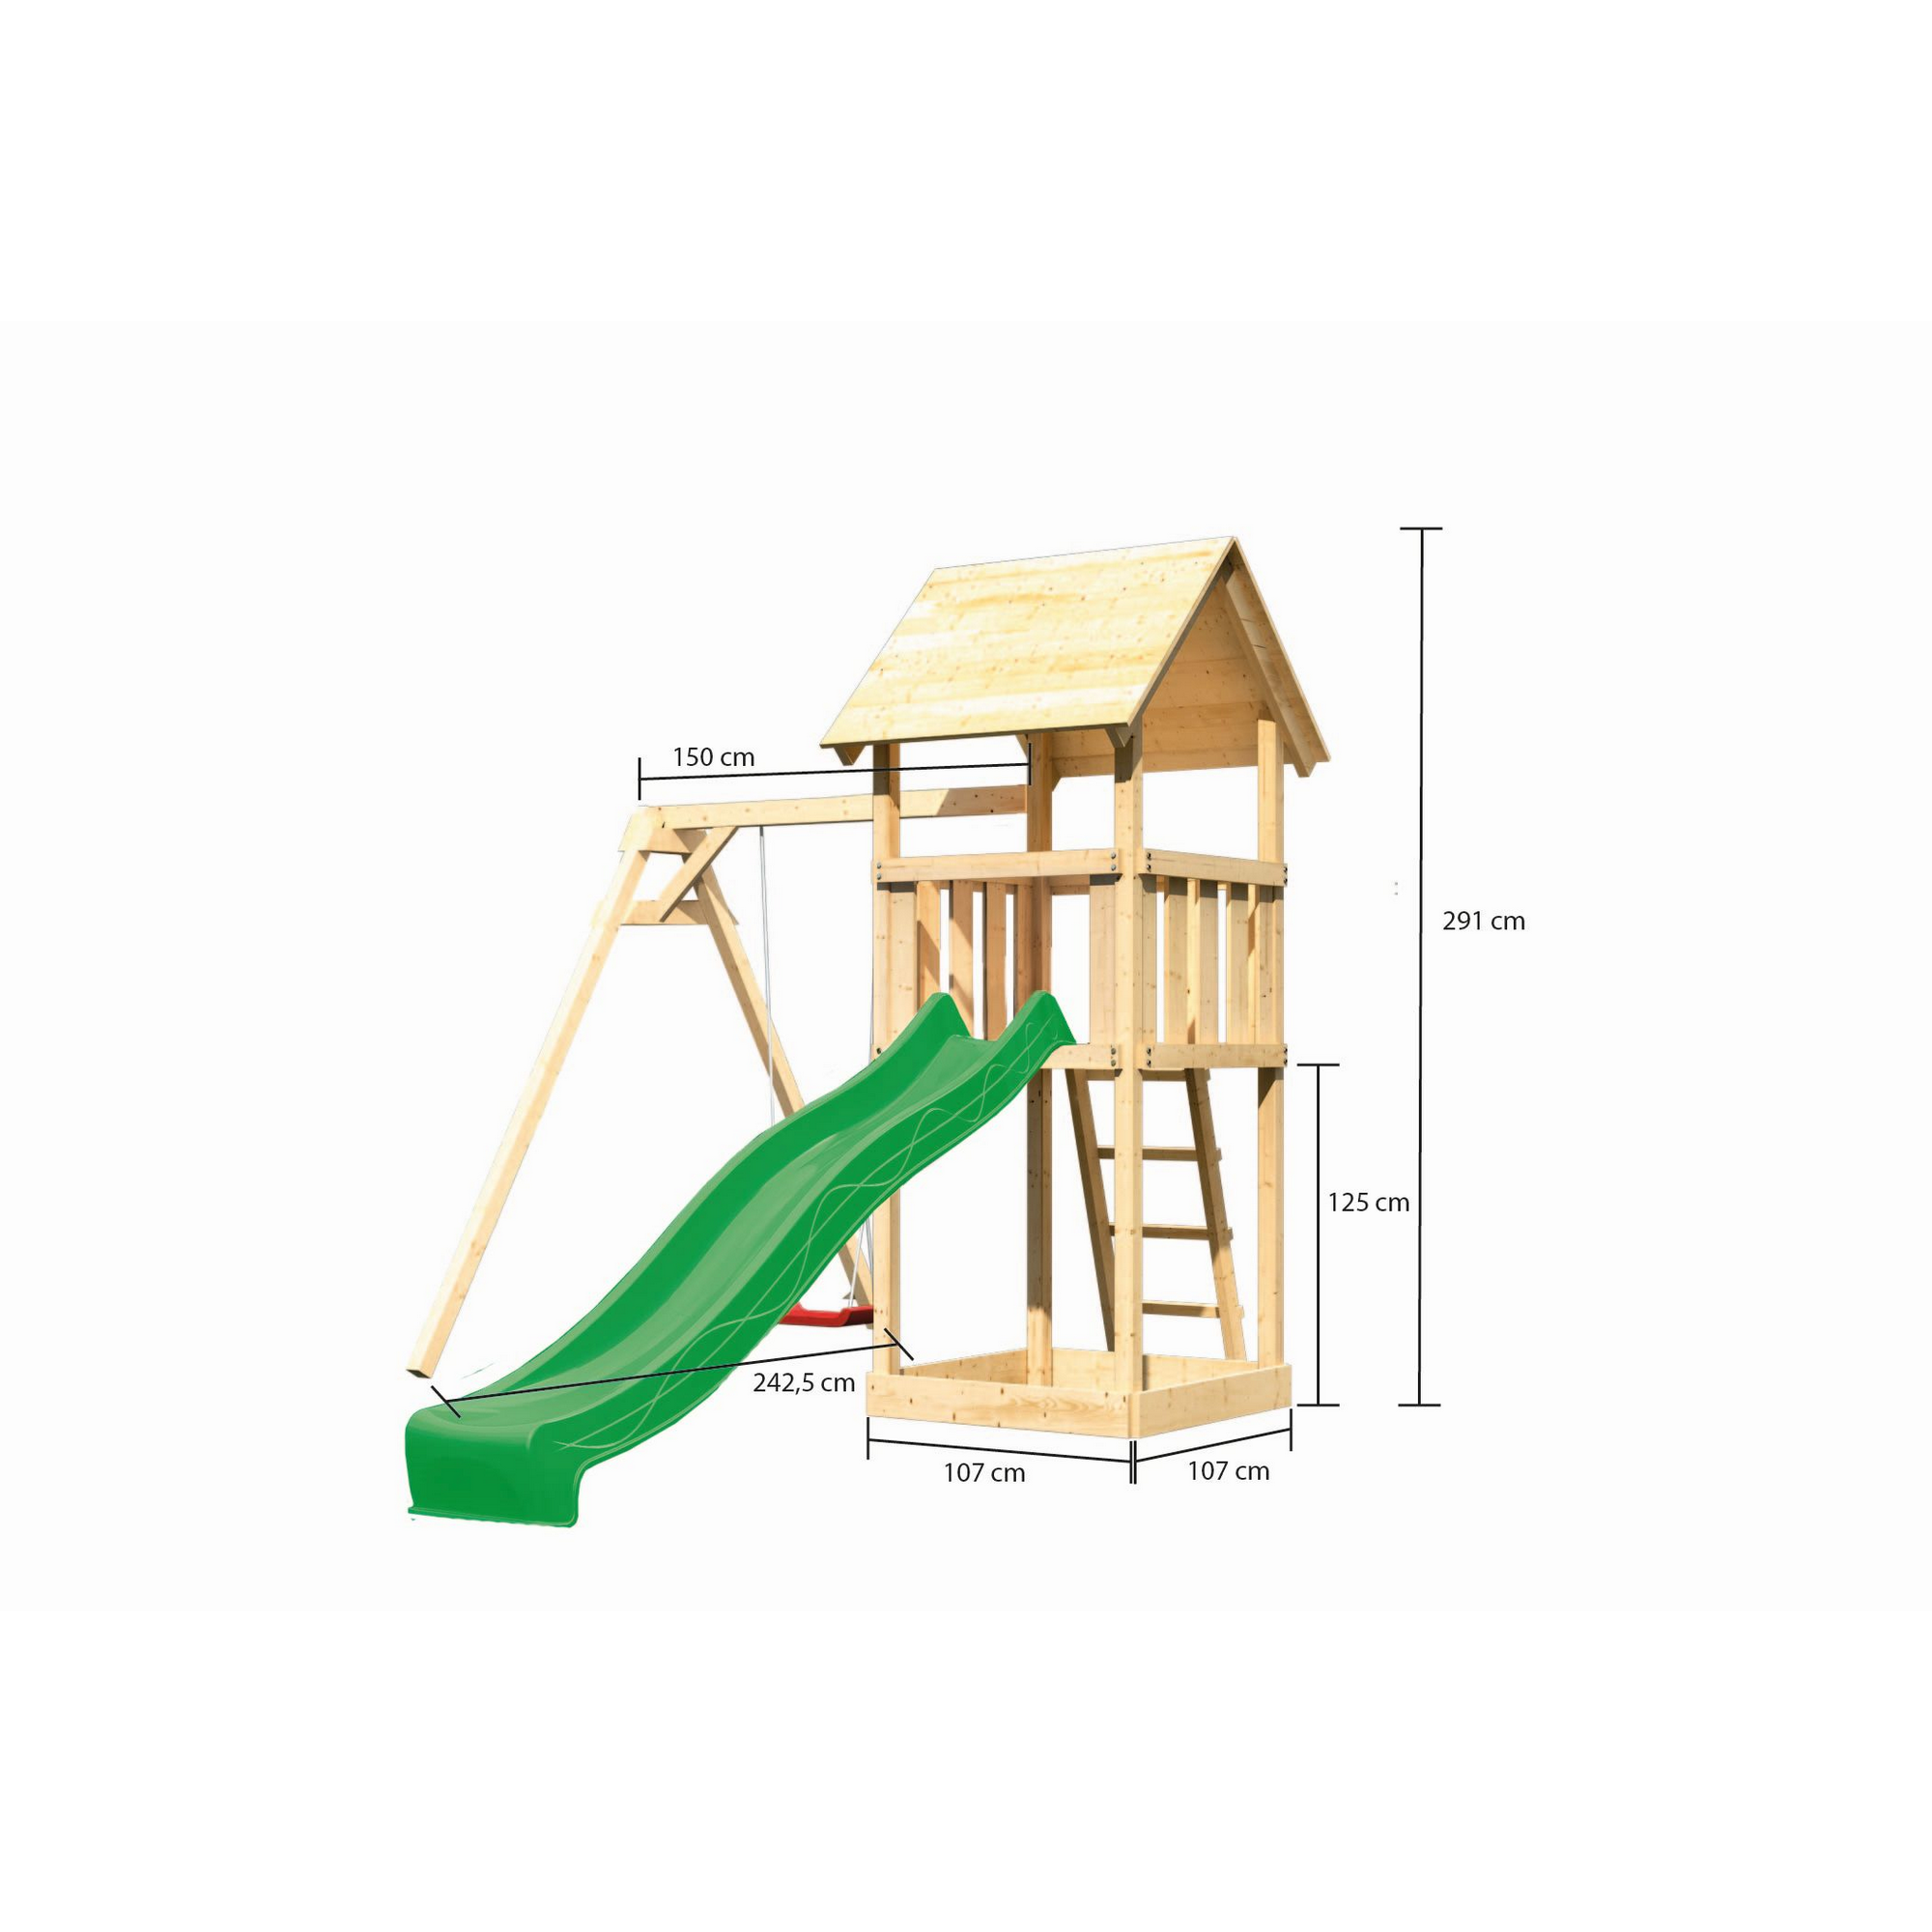 Kinderspielturm 'Lotti' Einzelschaukel, Rutsche grün, 257 x 242,5 x 291 cm + product picture